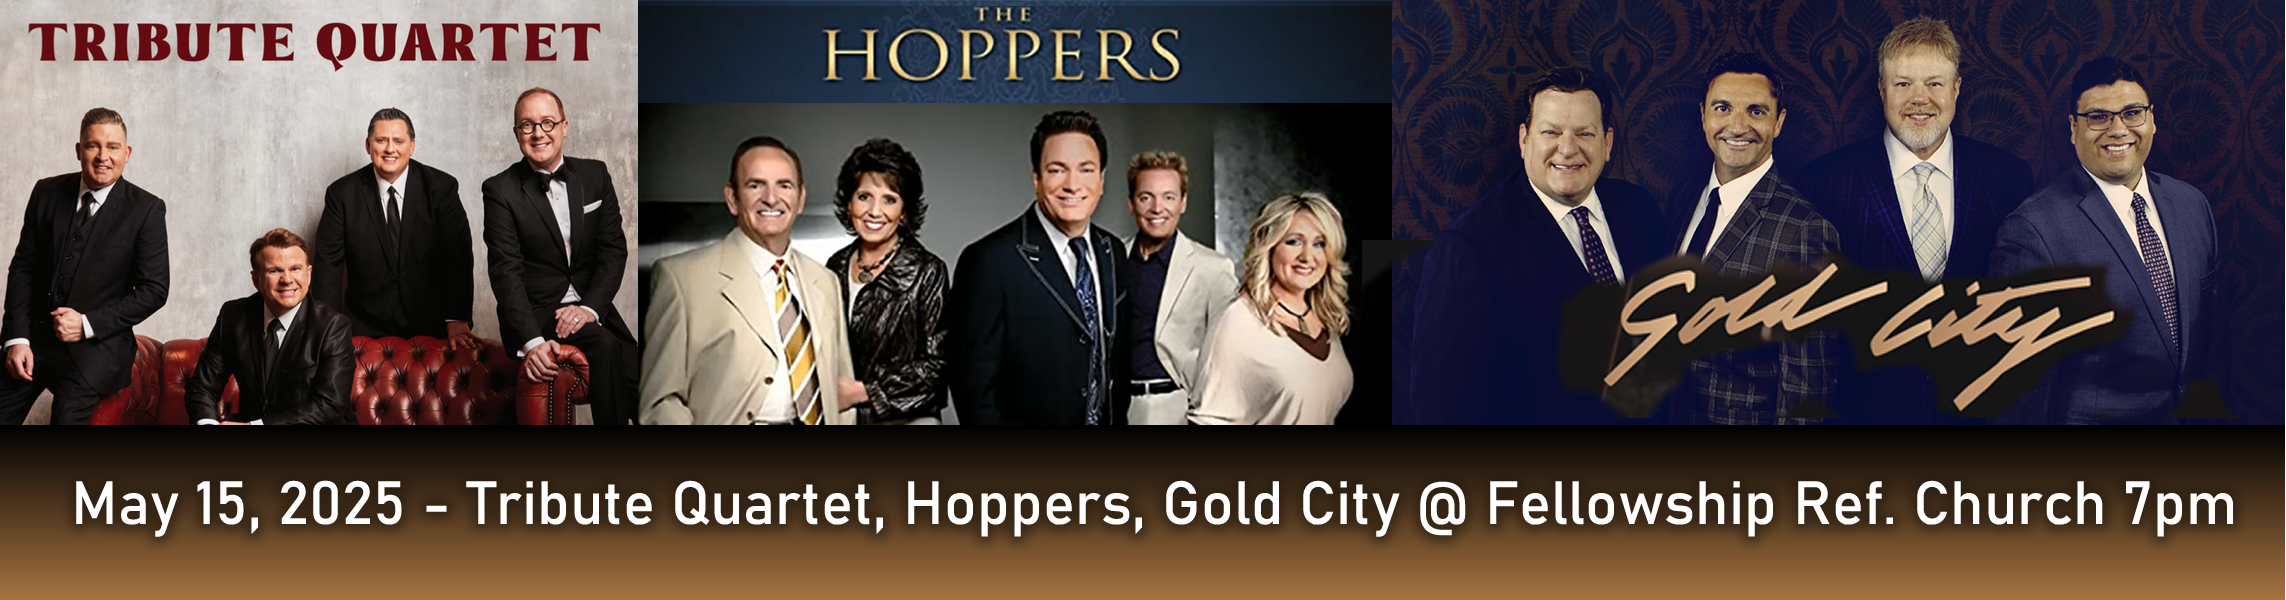 Tribute Quartet Hoppers Gold City